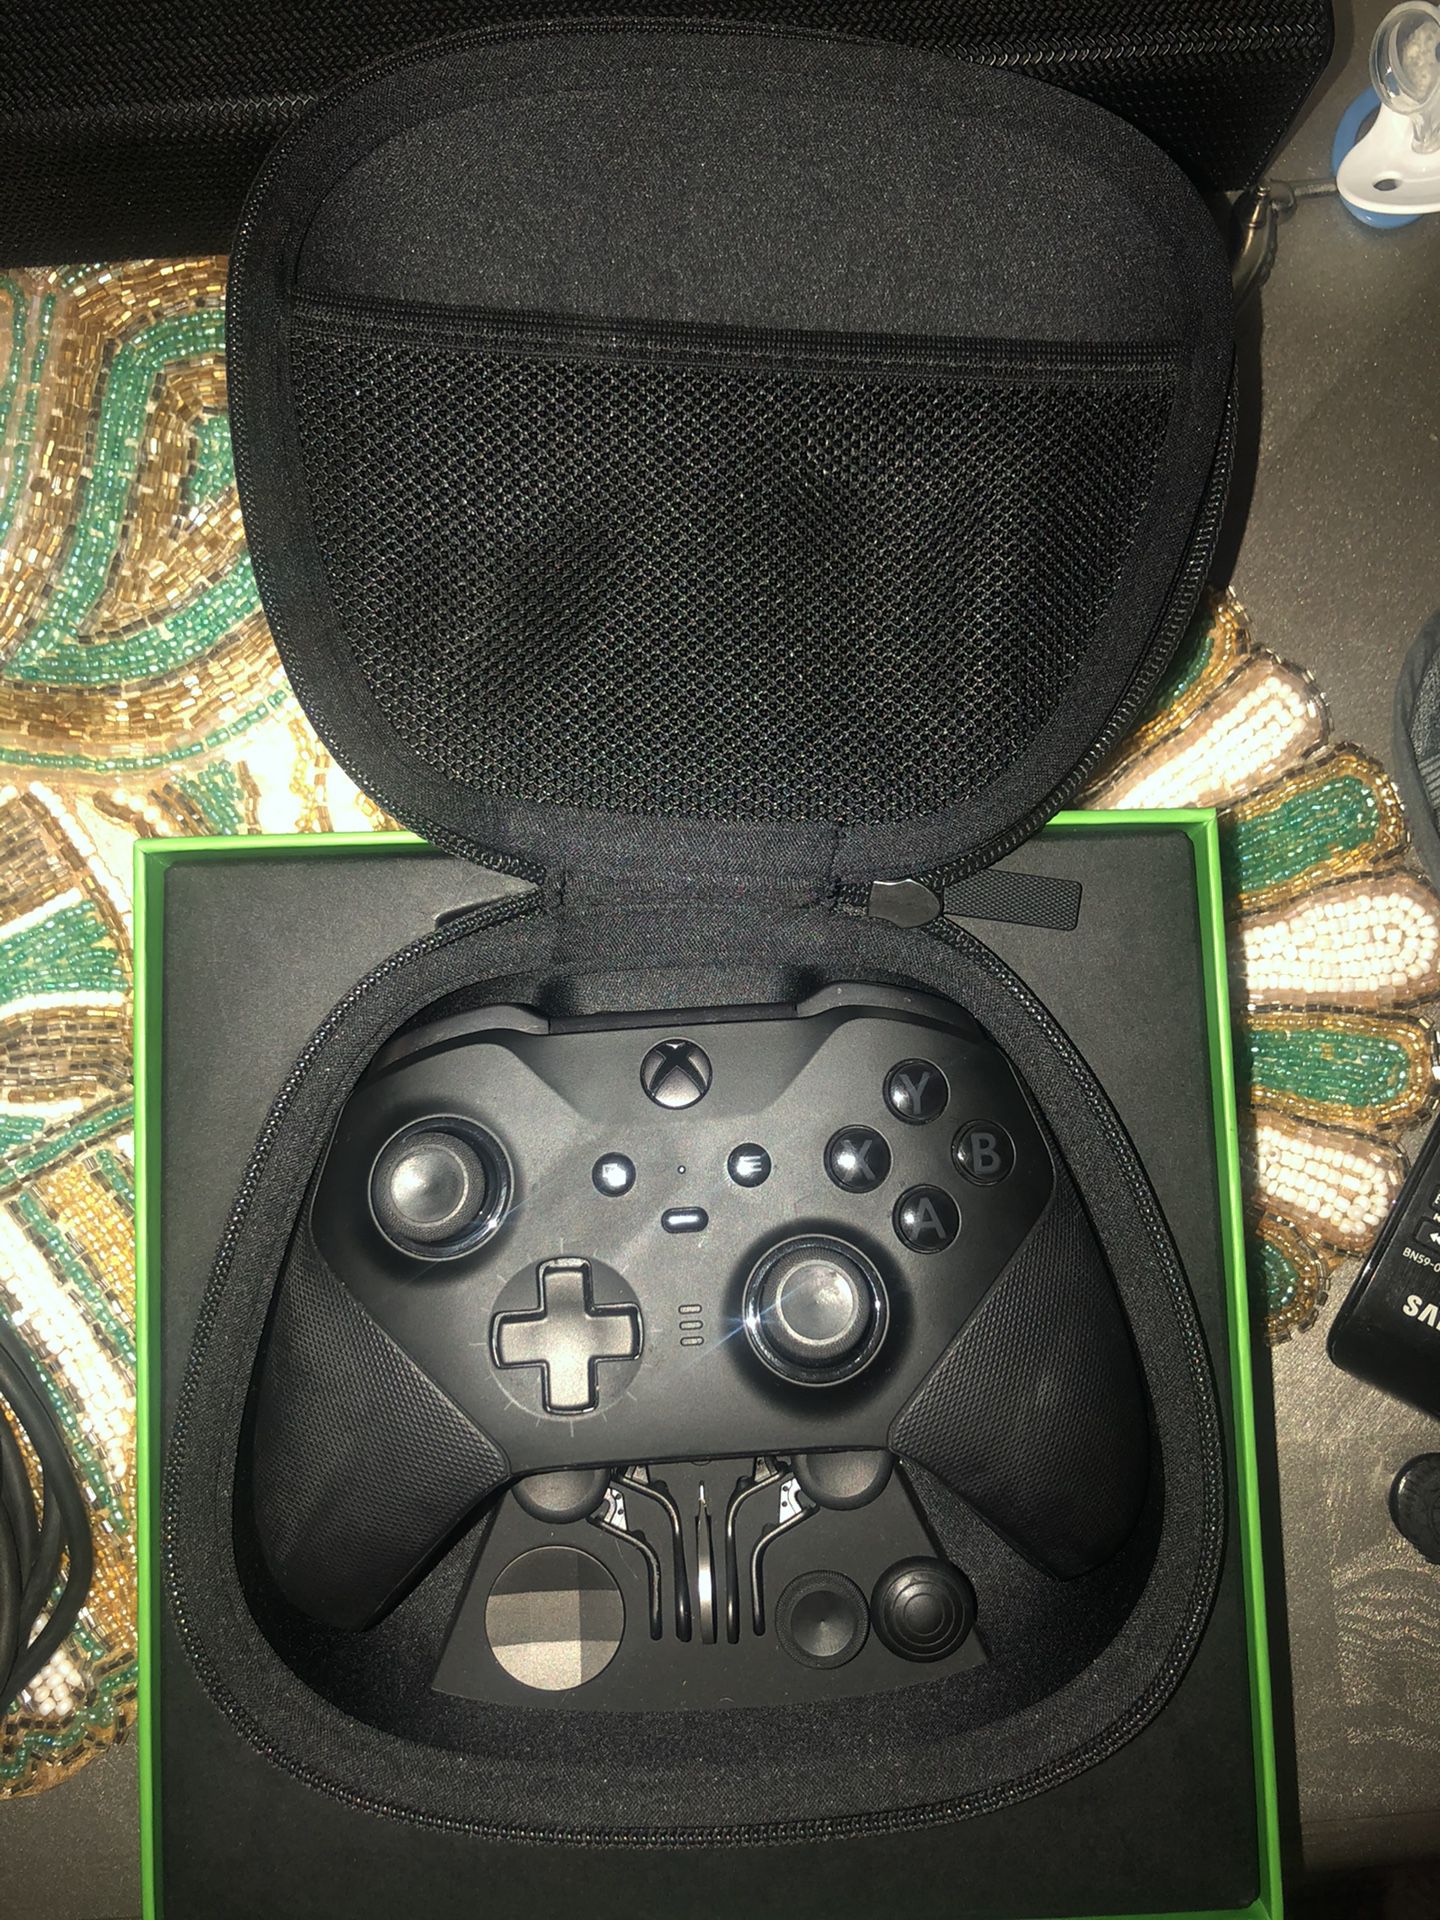 Xbox elite controller series 2